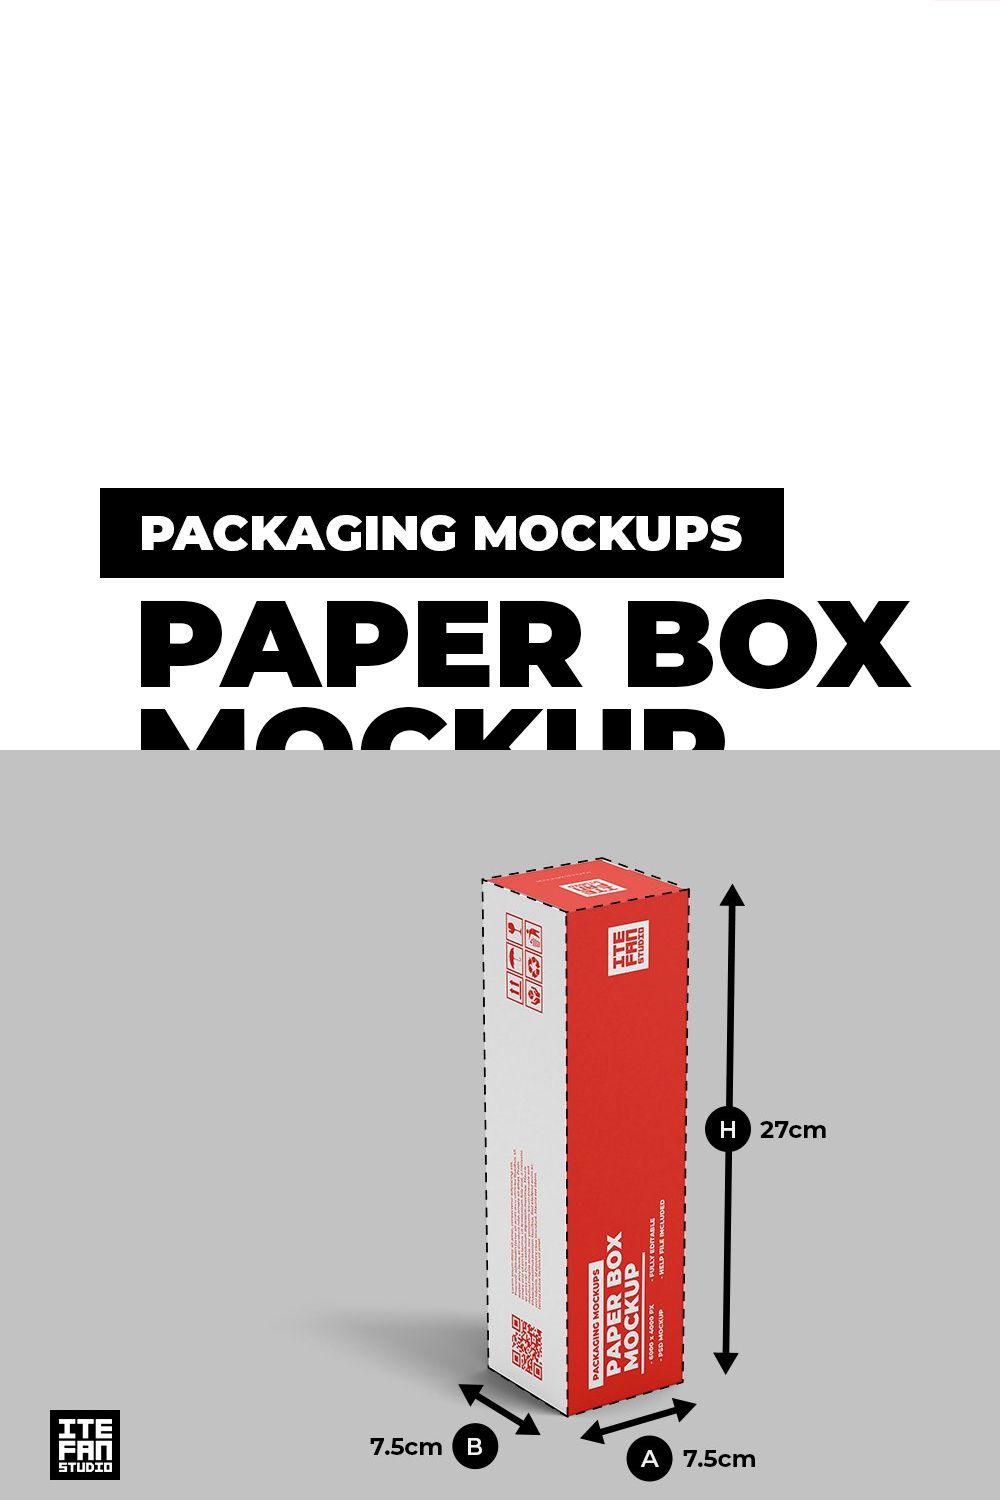 Paper Box Mockup pinterest preview image.